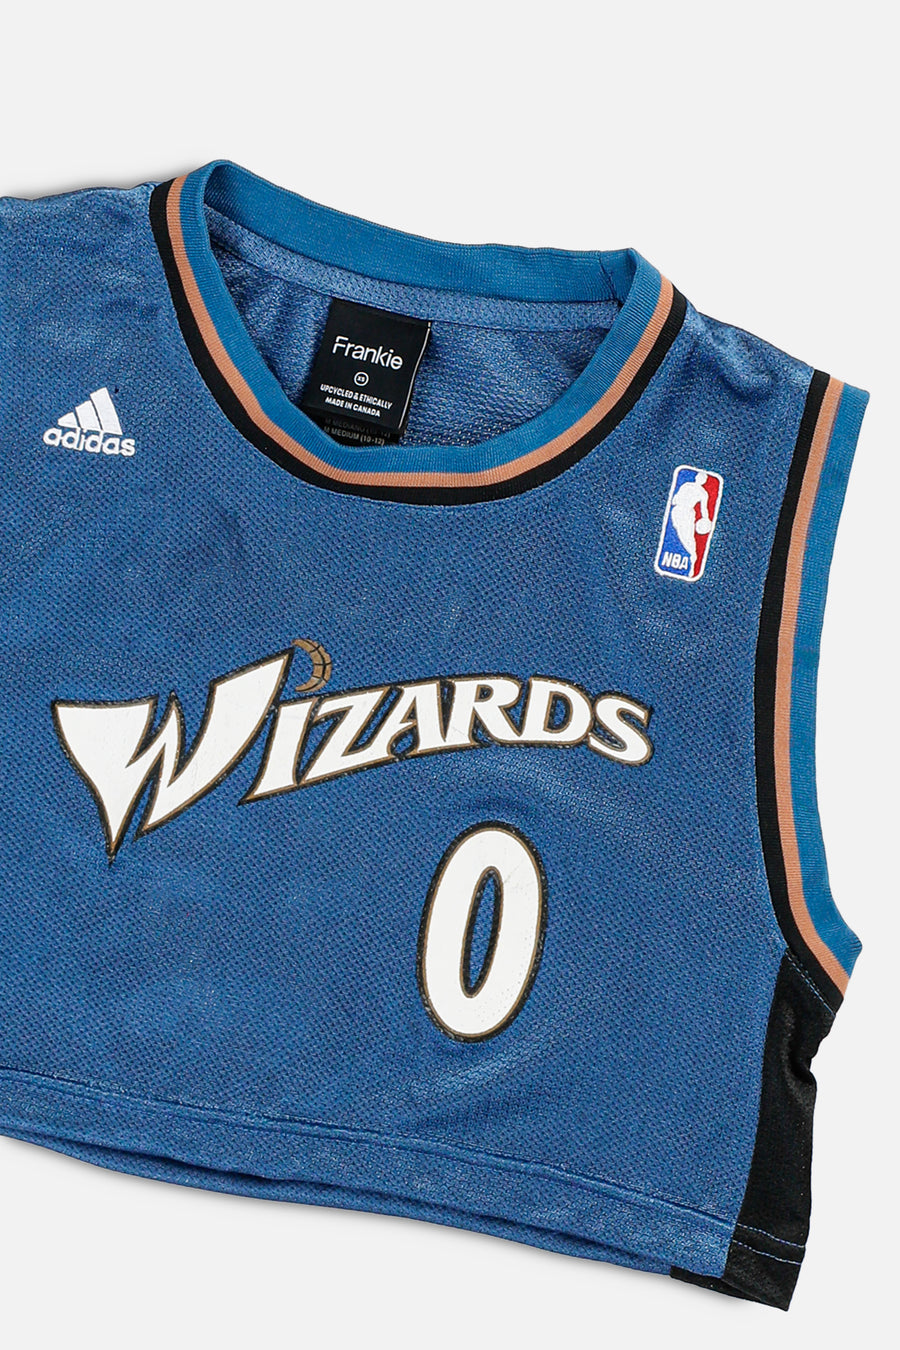 Rework Washington Wizards NBA Crop Jersey - XS